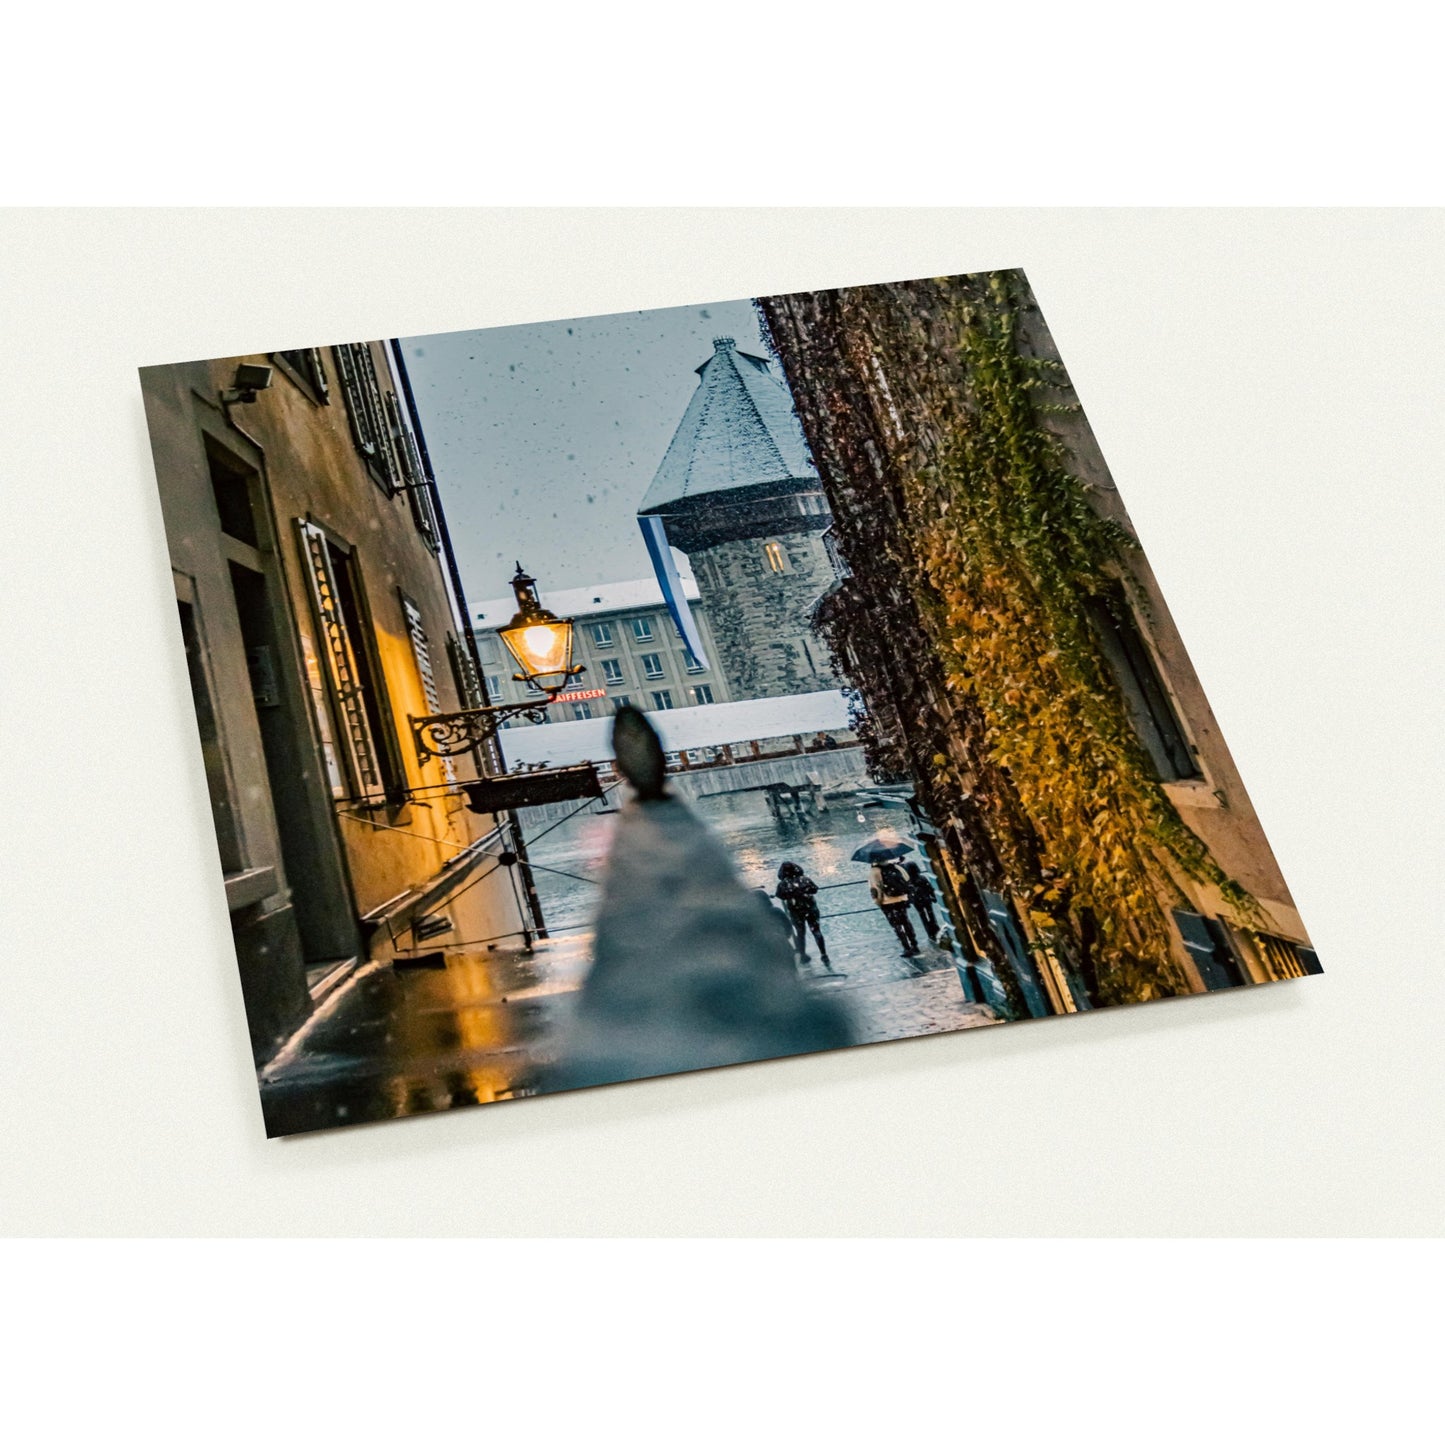 Winter magic: Chapel Bridge in the snow - set of 10 postcards with envelopes